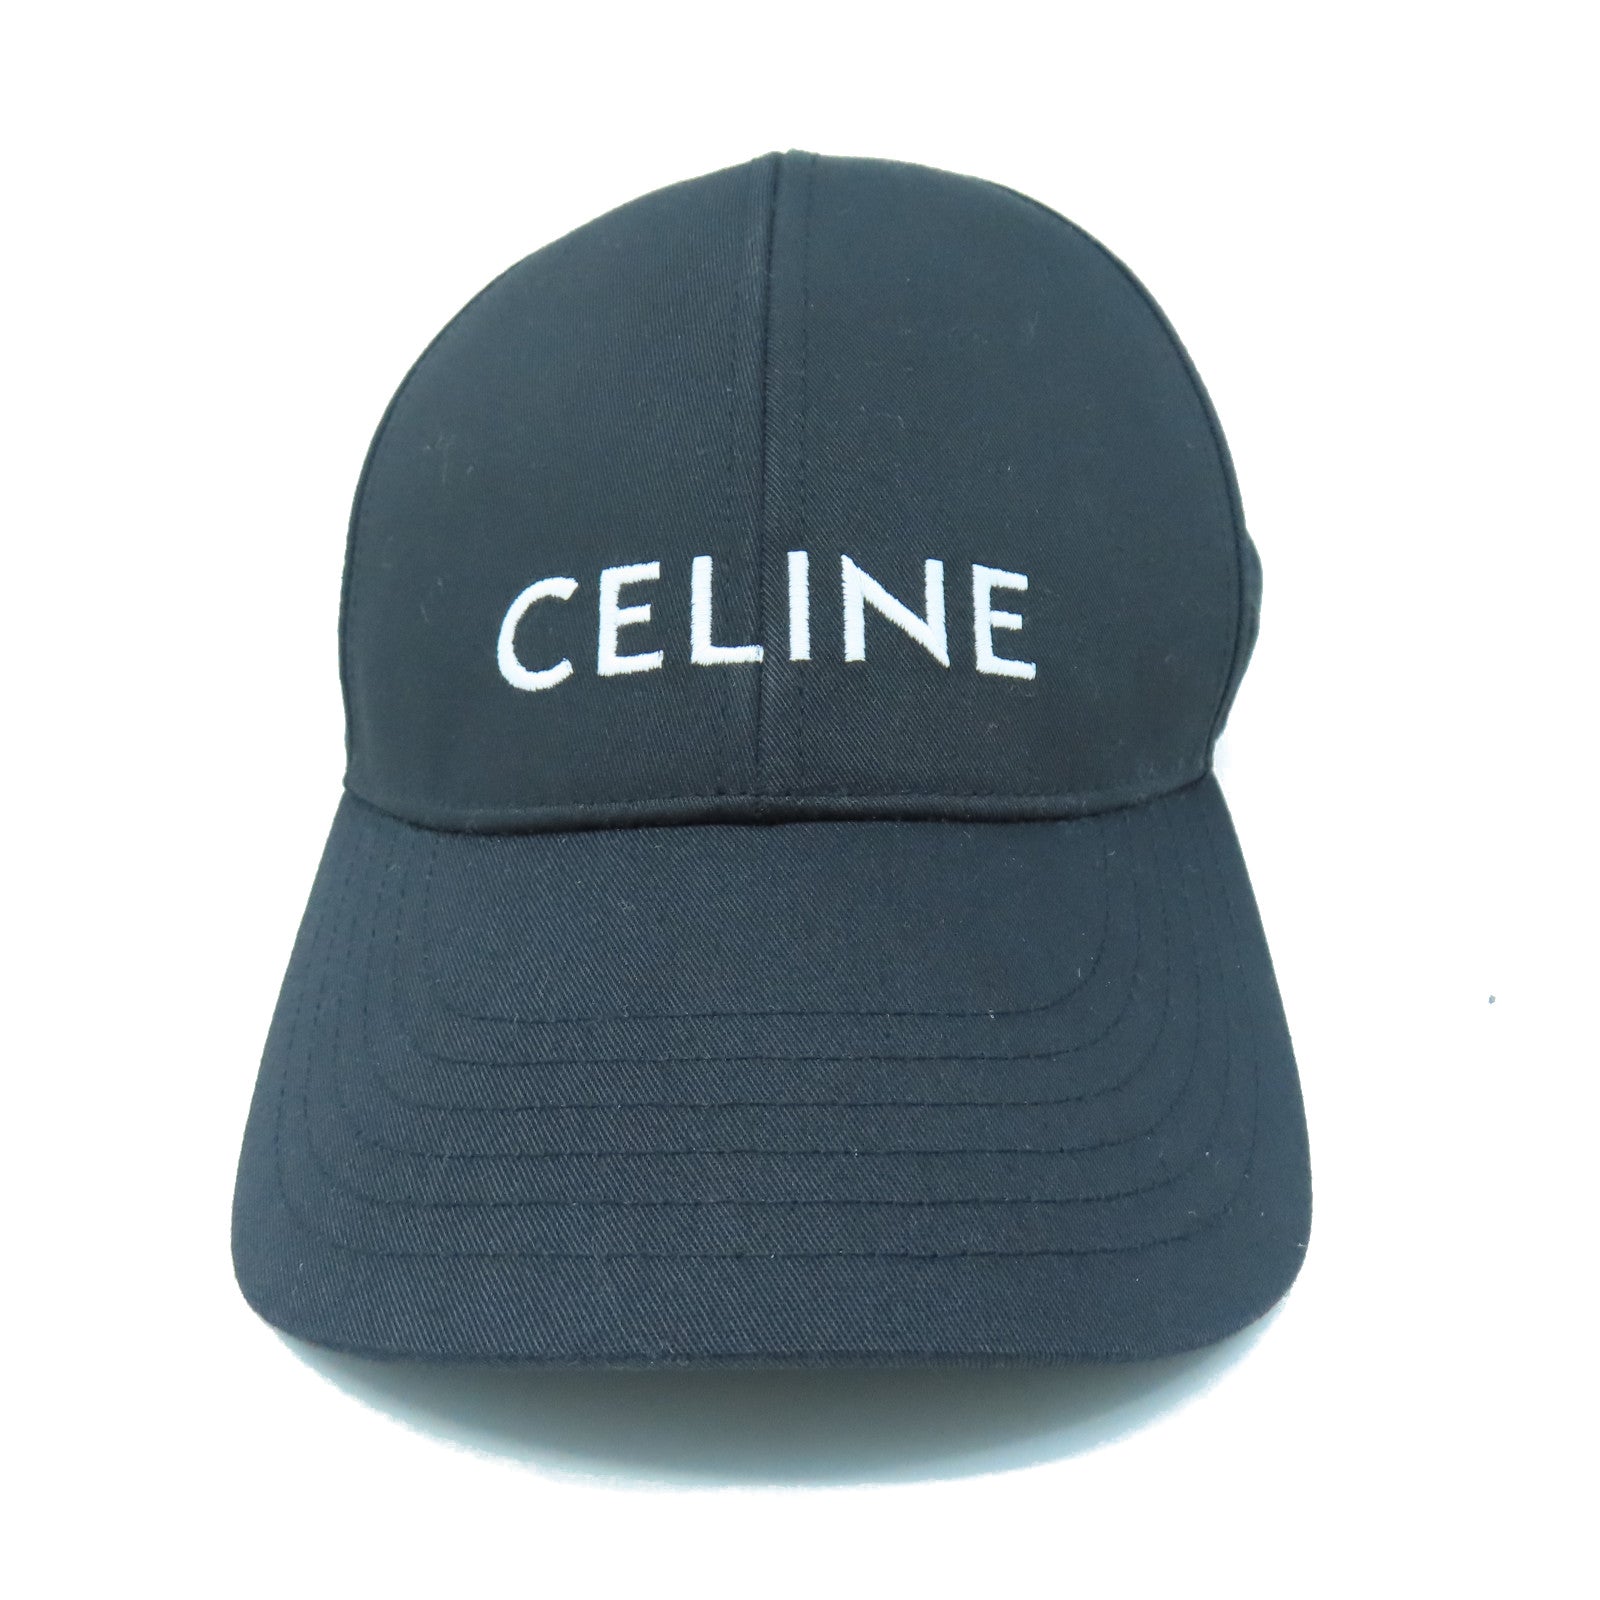 CELINE 綿質/聚酯纖維Hat金扣棒球帽黑色